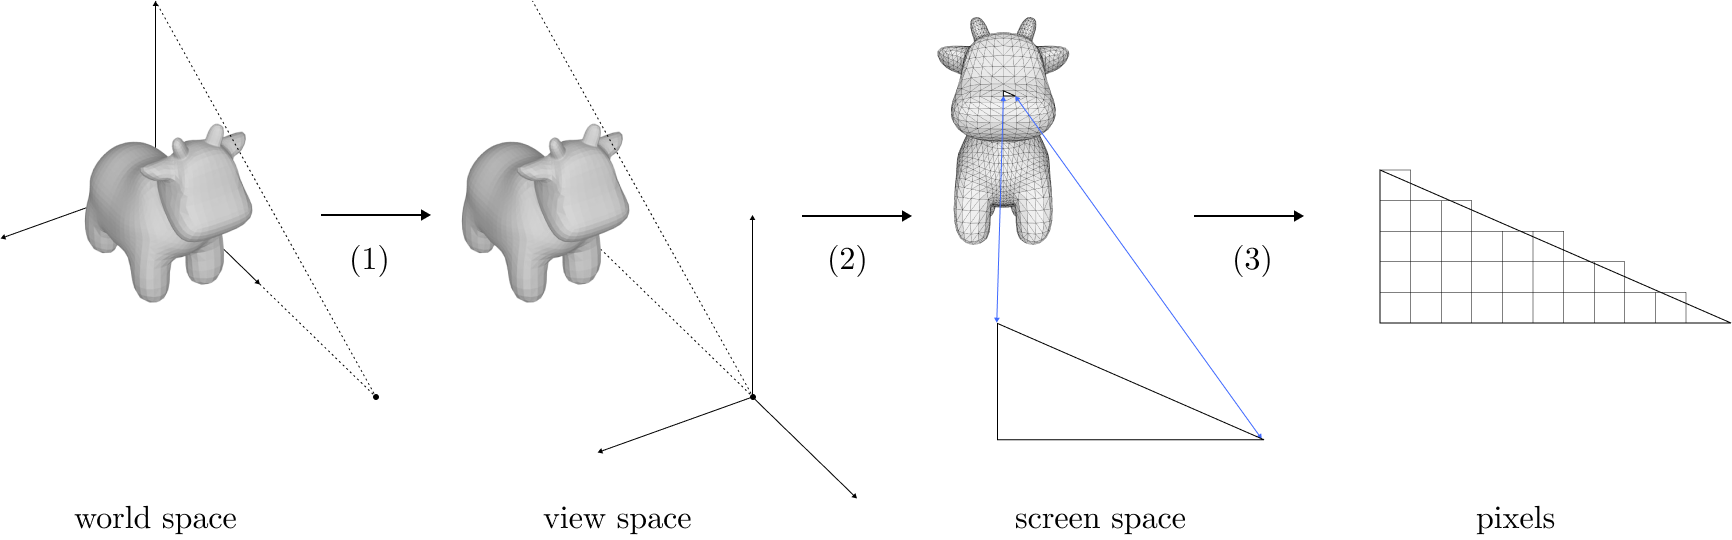 Traditional rasterization diagram